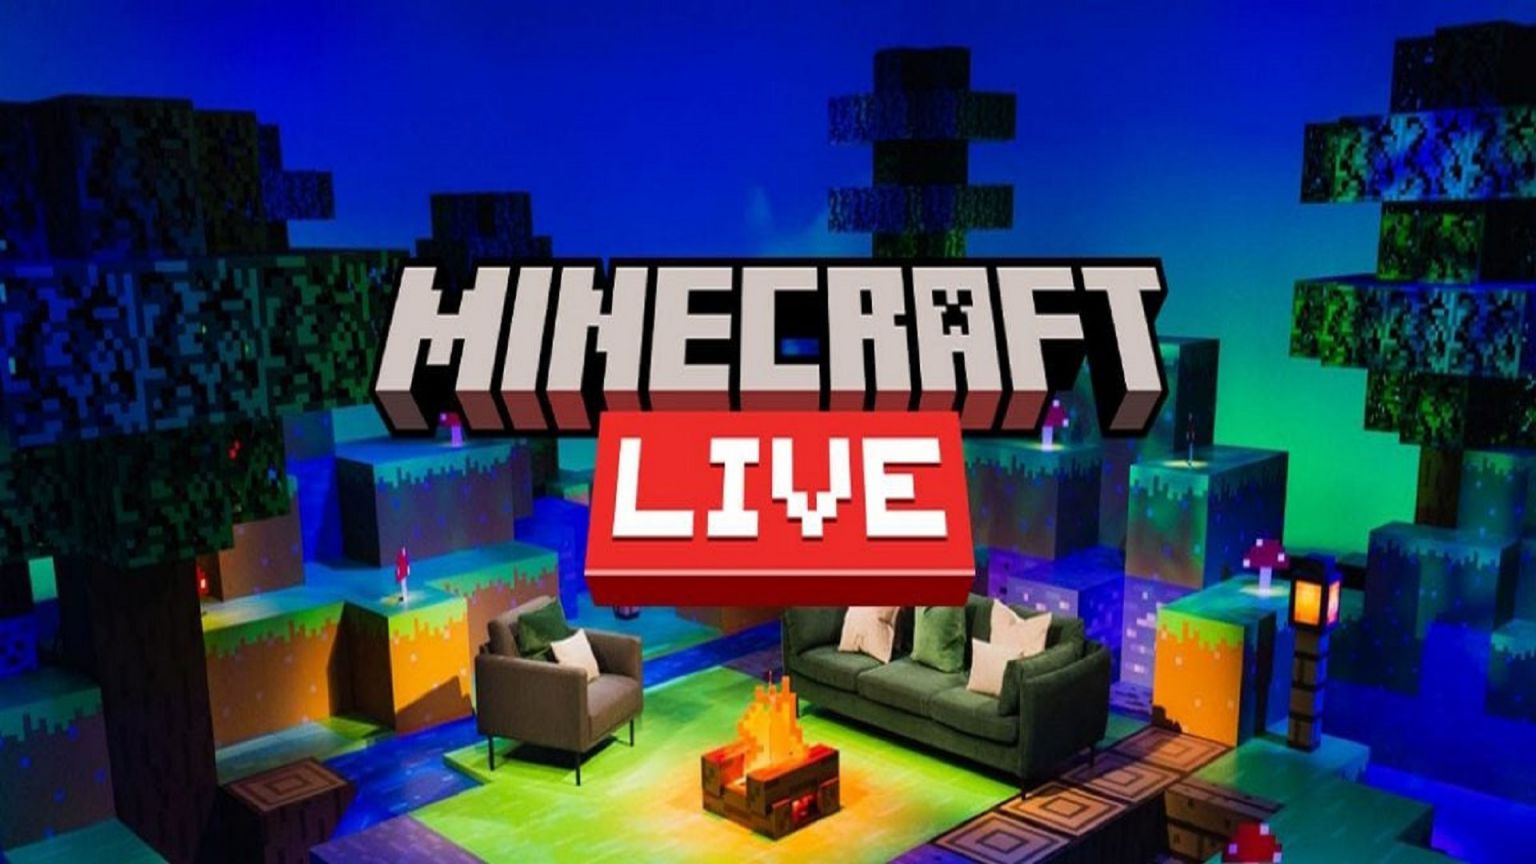 Minecraft Live 2022